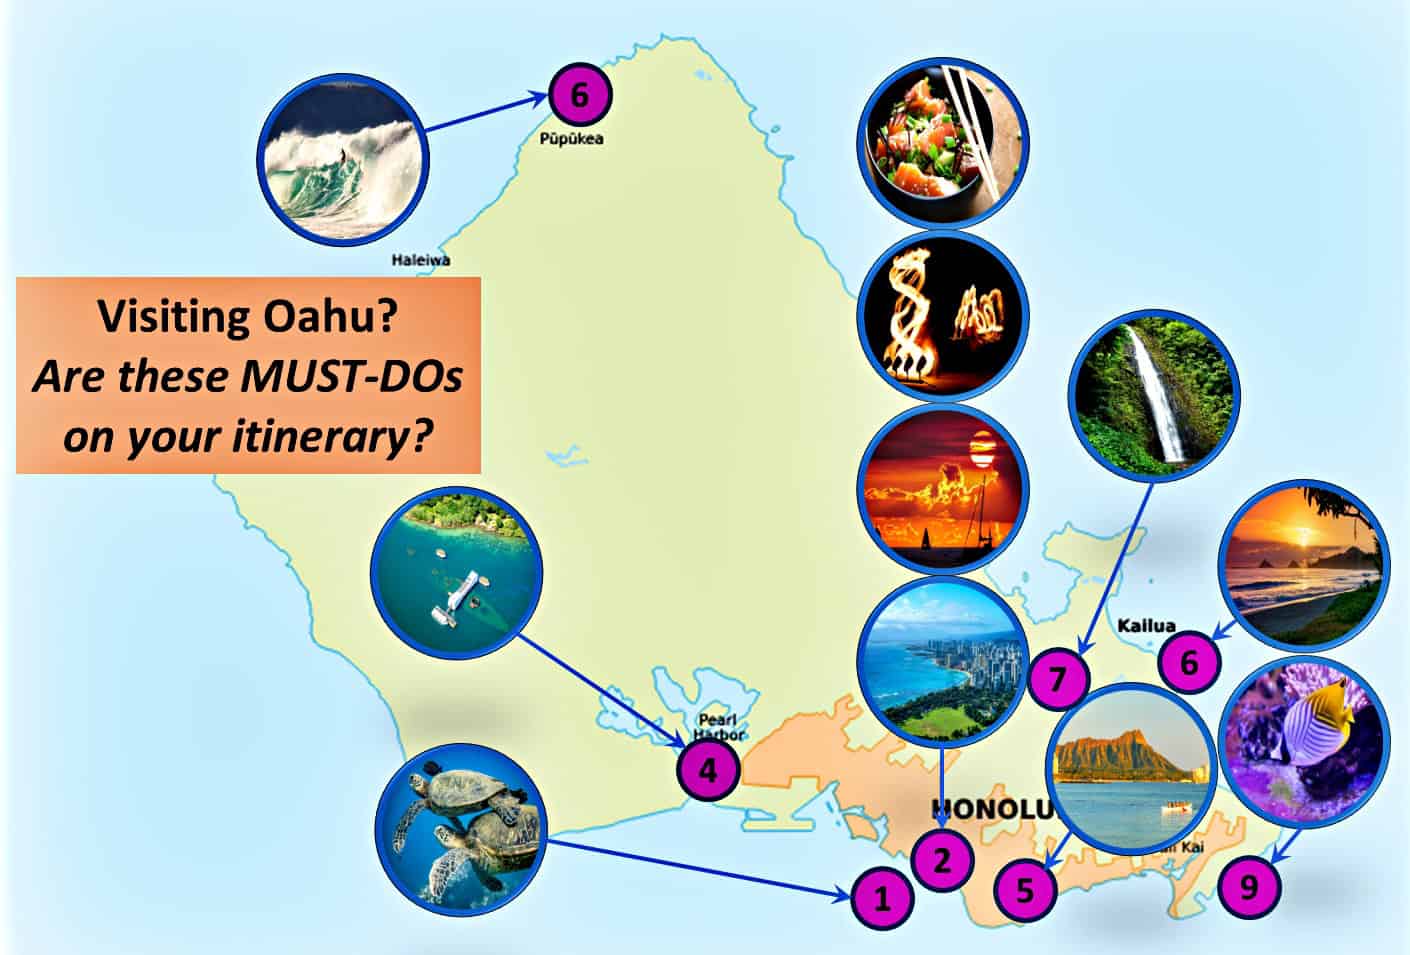 Top 10 Things To Do On Oahu, Hawaii